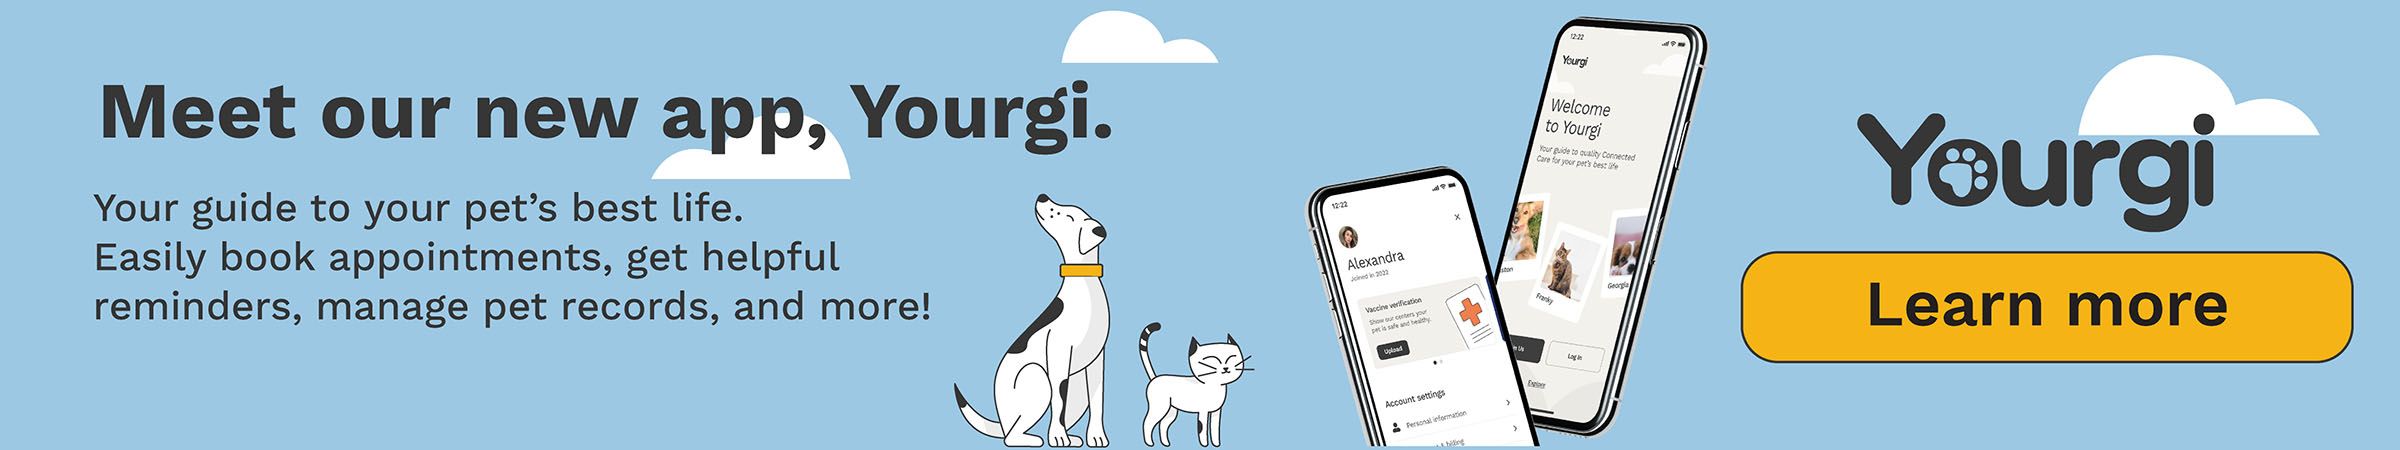 Meet our yougi app